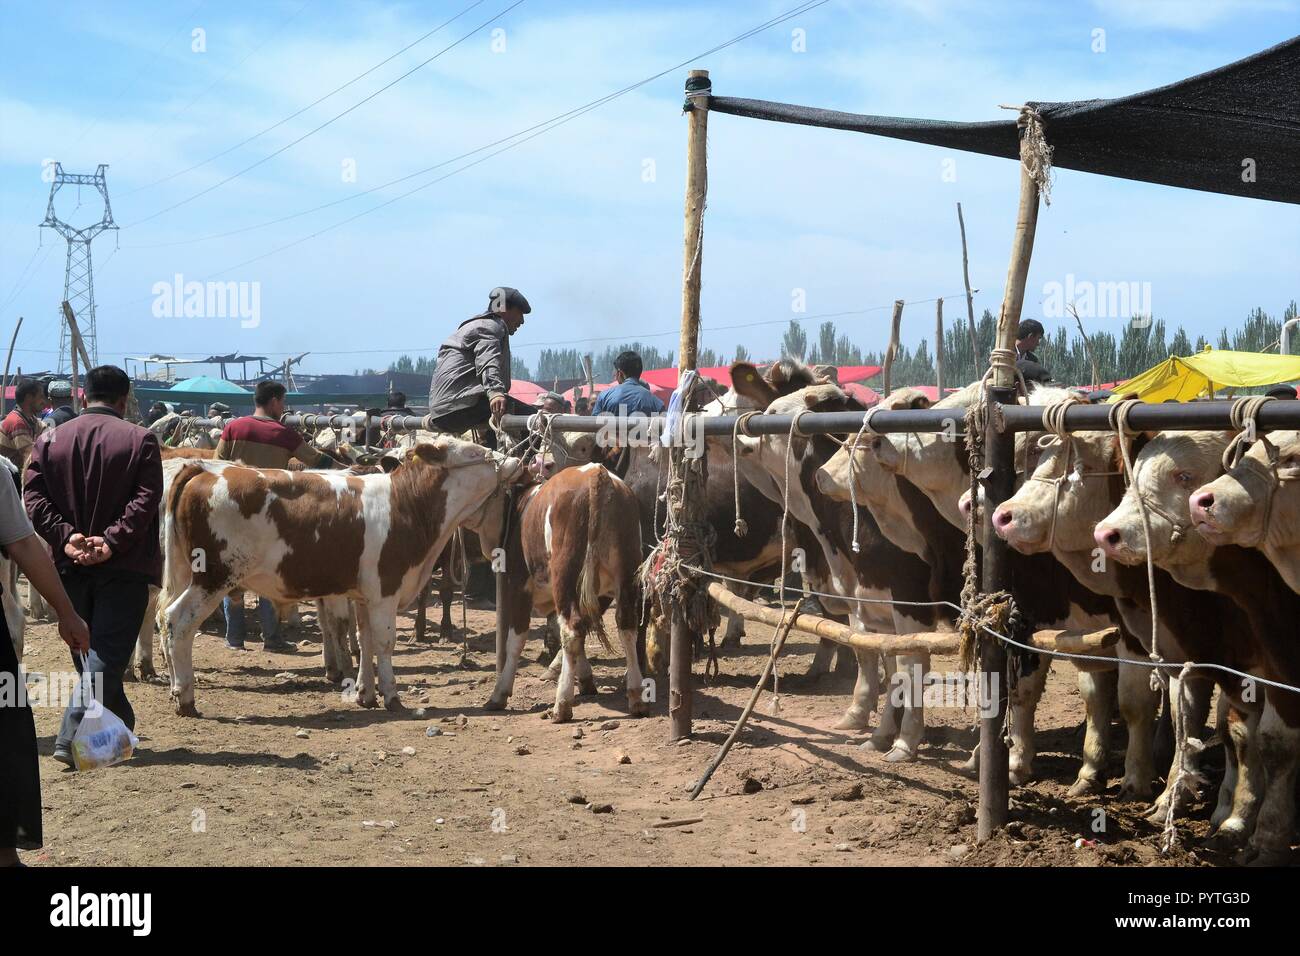 Domenica il bestiame mercato bazaar di Kashgar, Kashi, Xinjiang, Cina, Uyghur regione autonoma Foto Stock